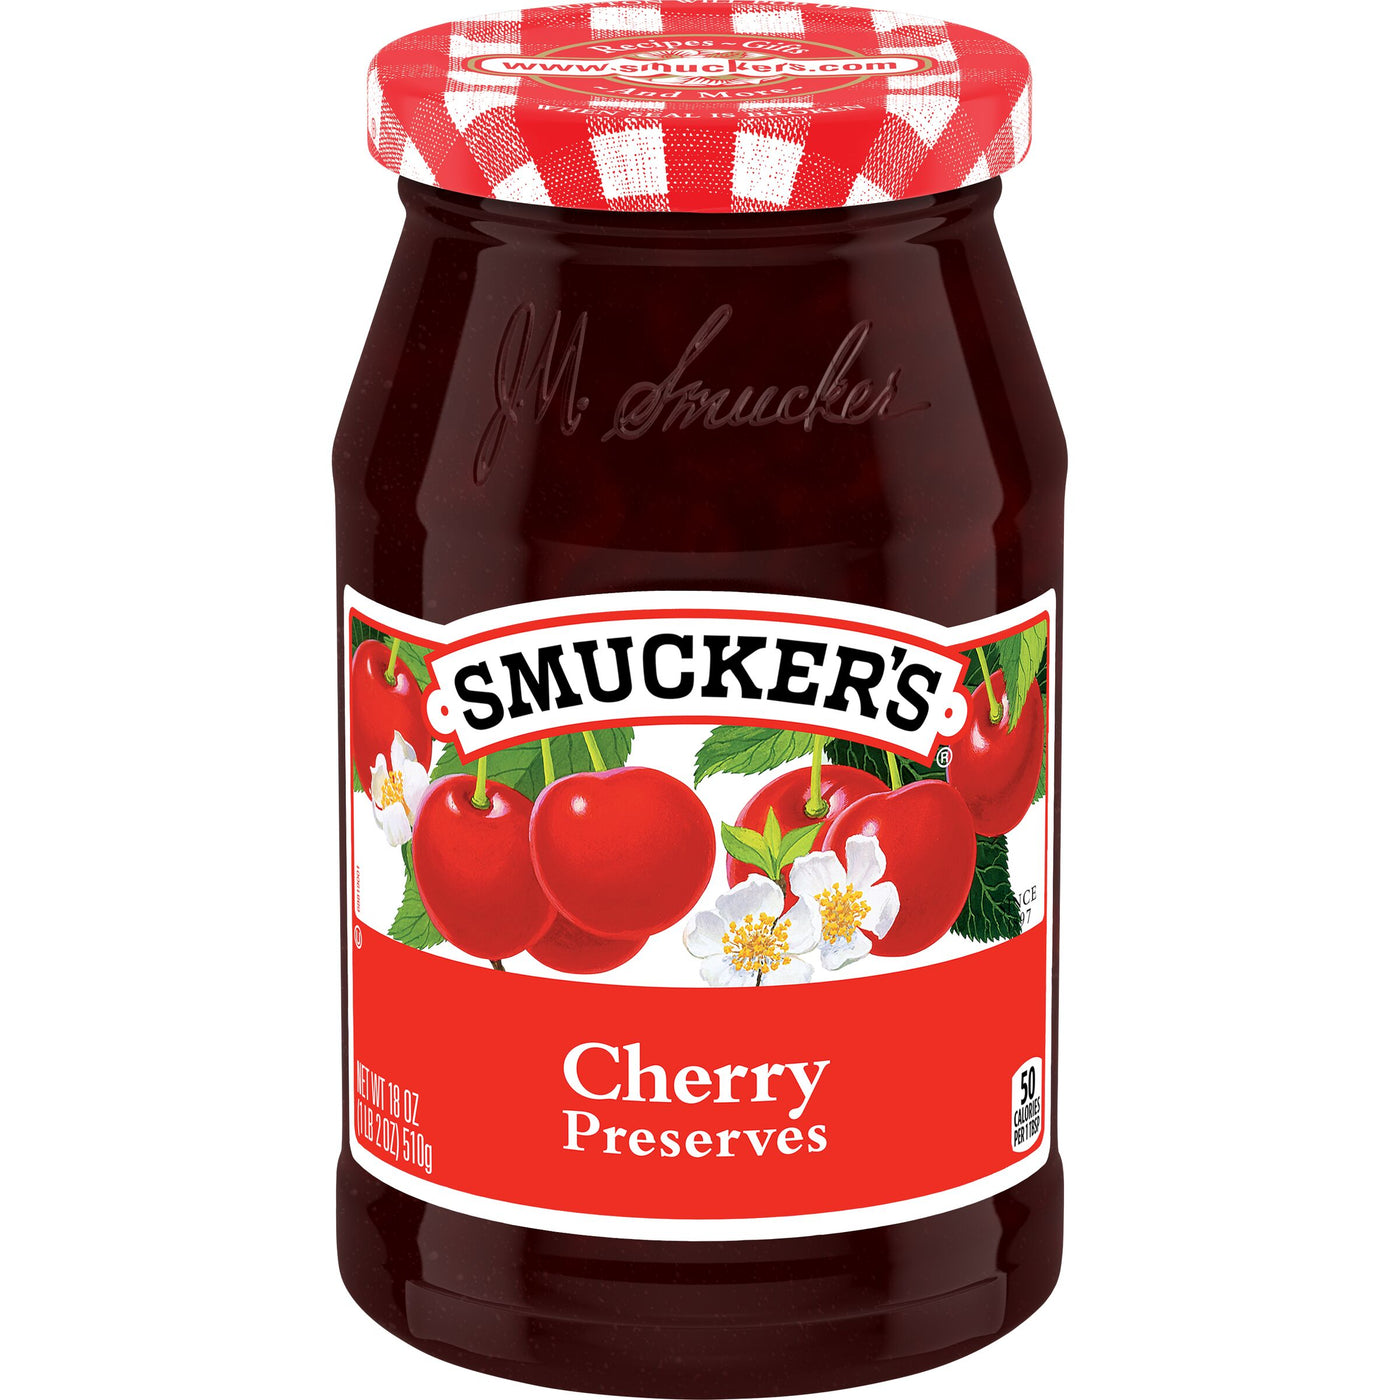 Smucker's Cherry Preserves